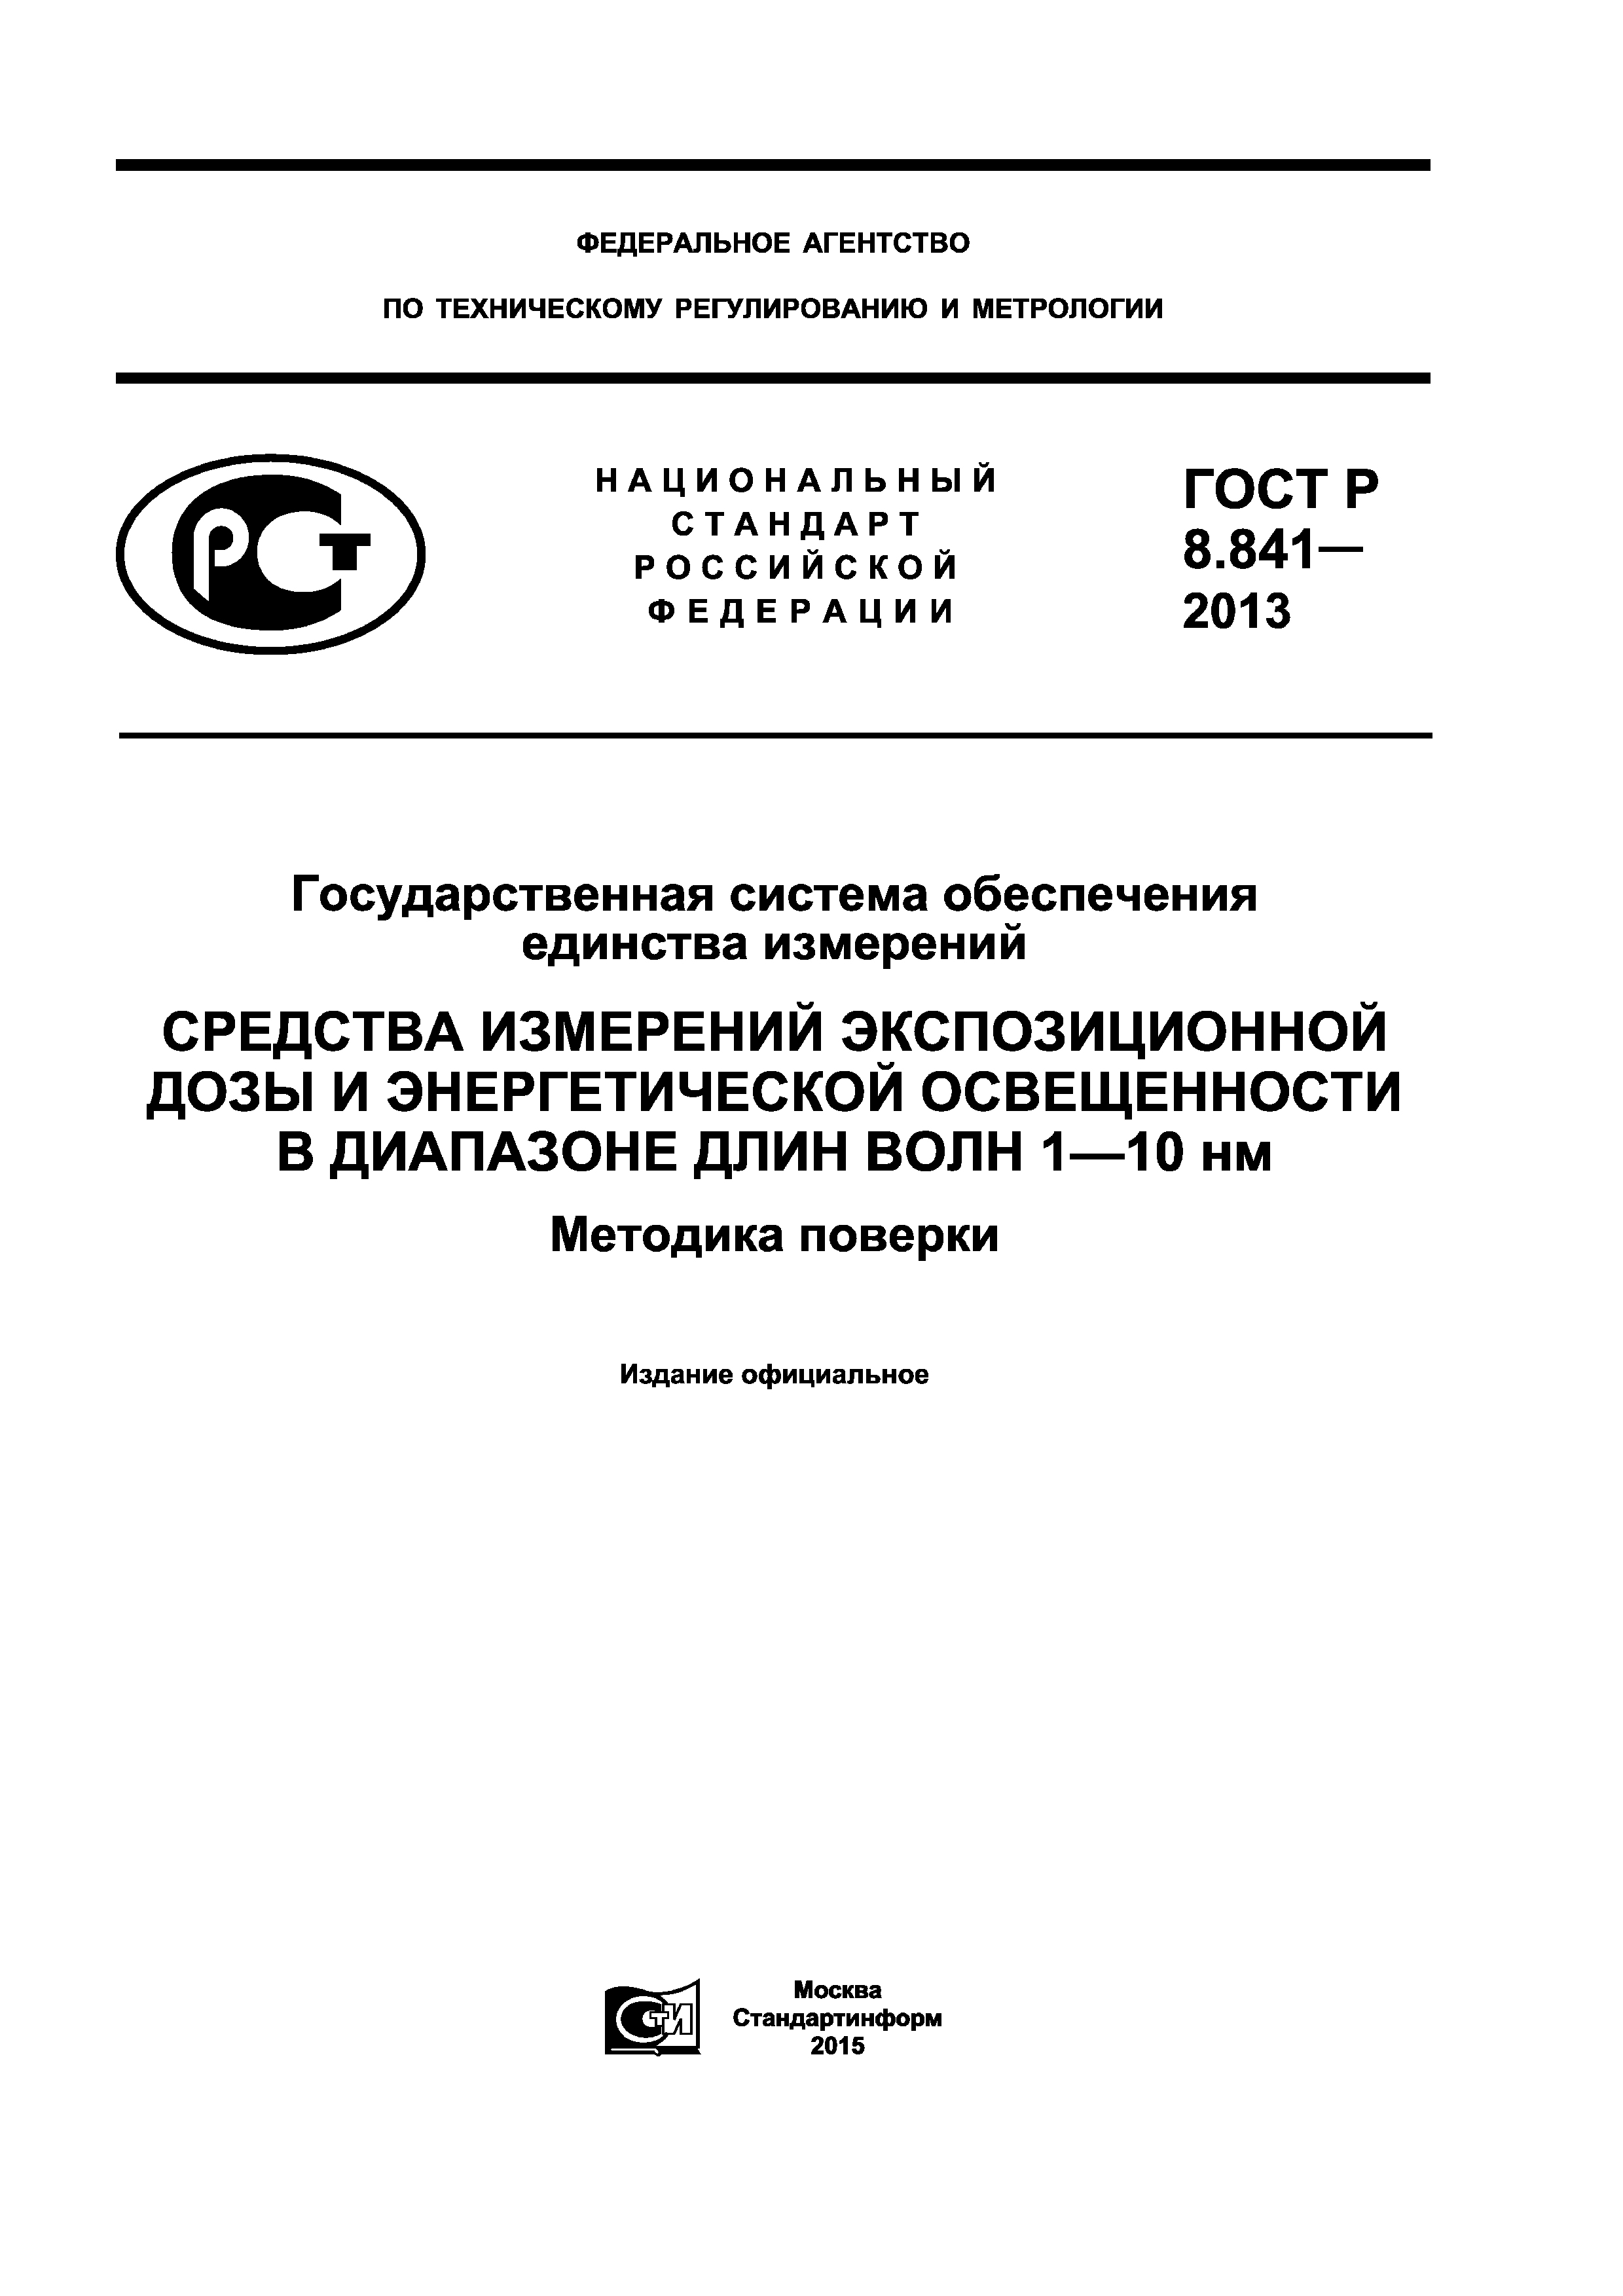 ГОСТ Р 8.841-2013